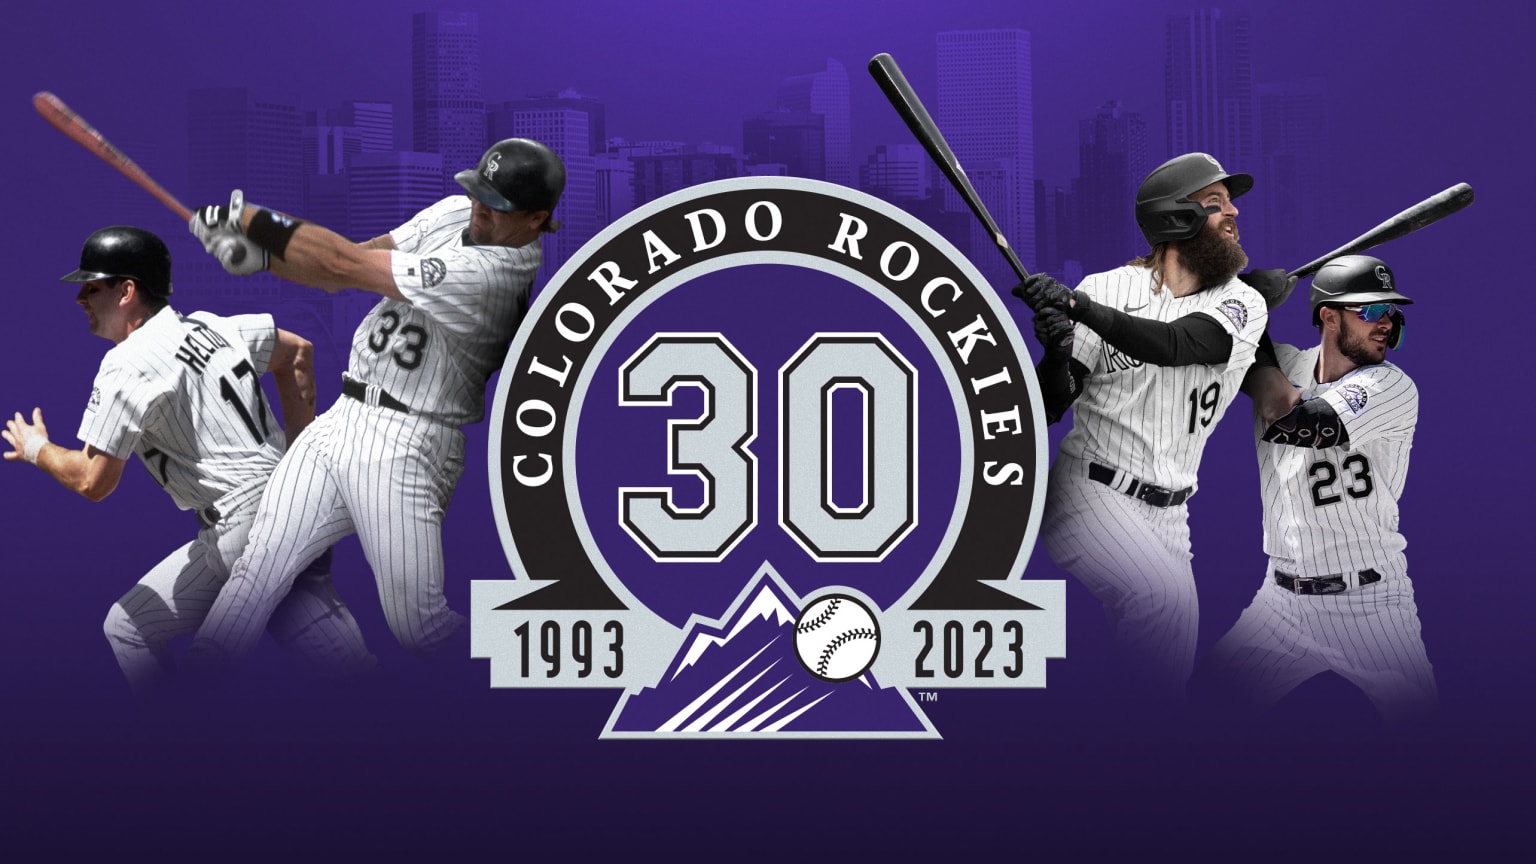 30 Years of Colorado Rockies Baseball - 5280